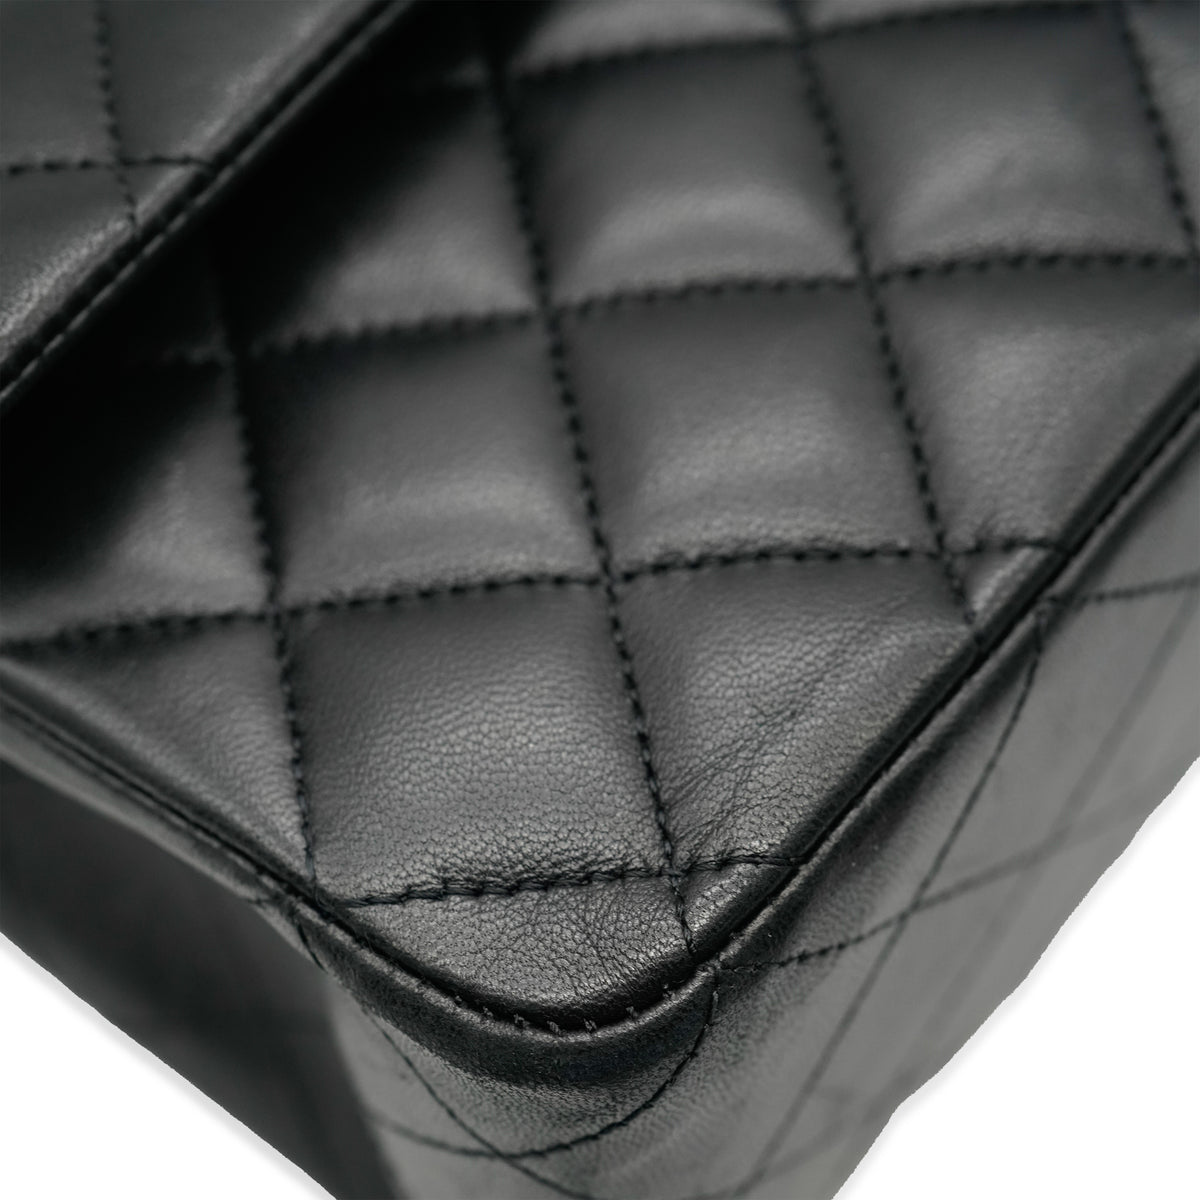 Chanel Black Quilted Lambskin Medium Classic Flap